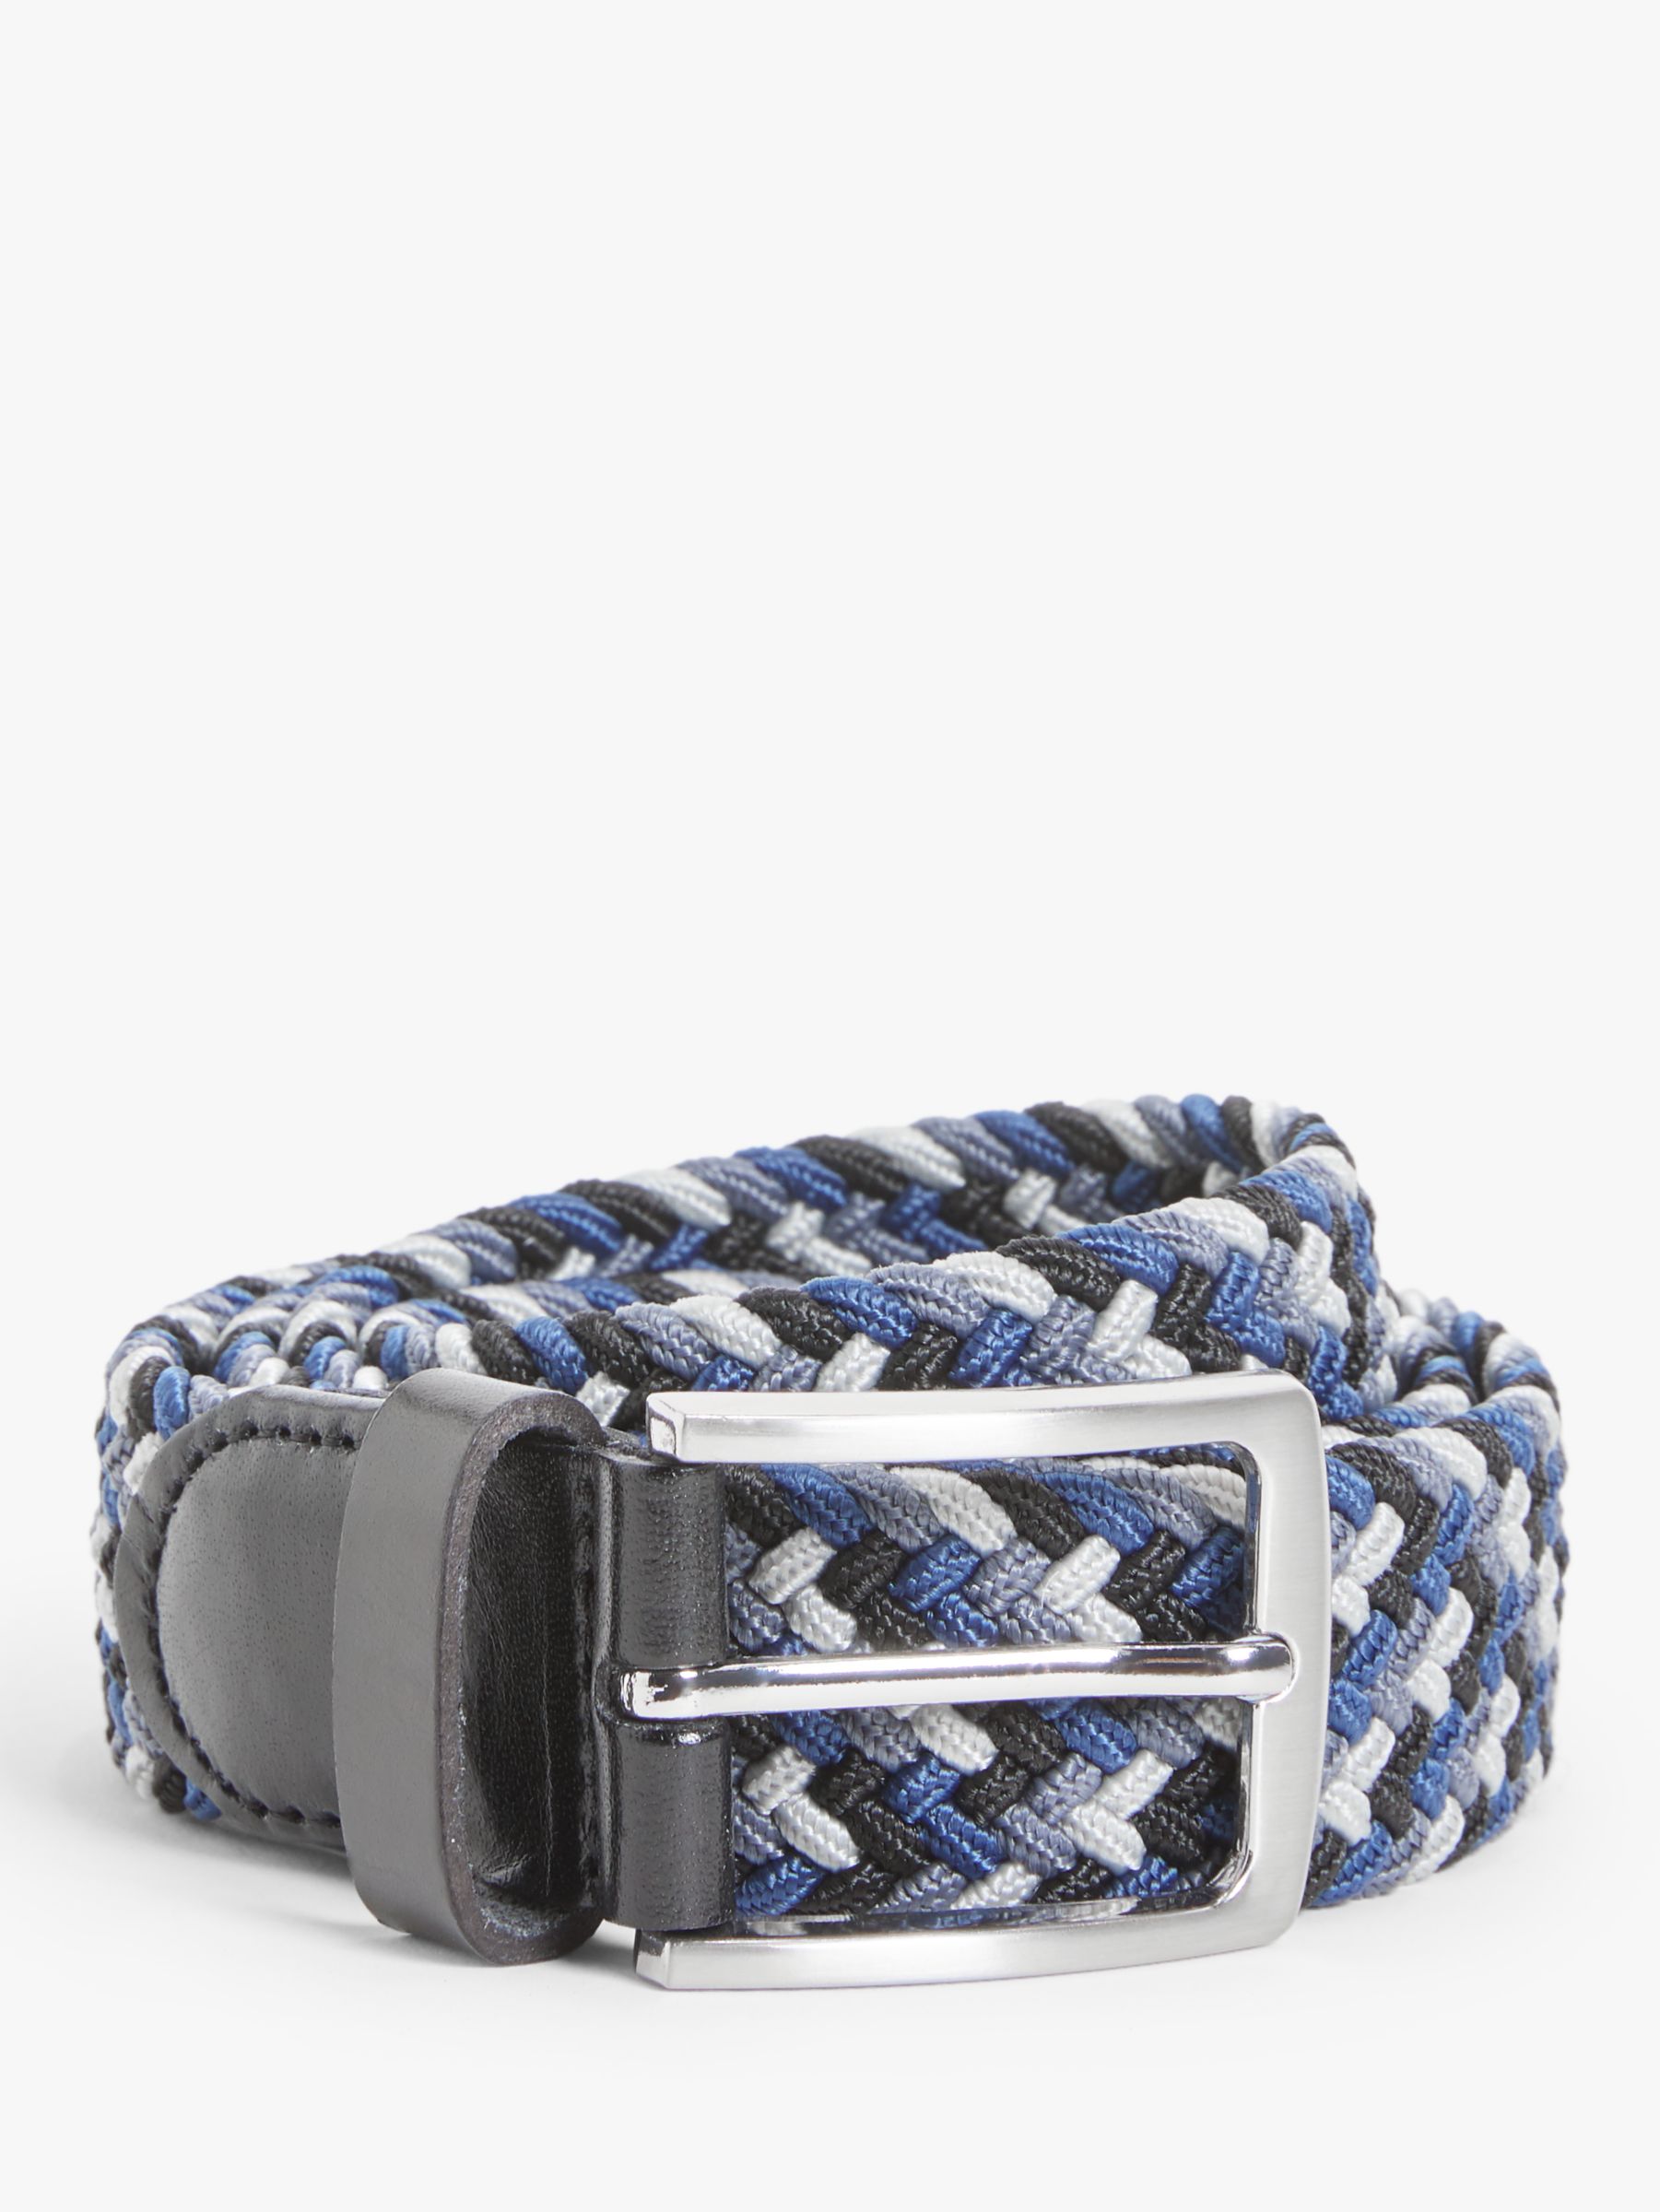 John Lewis 35mm Woven Belt, Blue/Multi, L